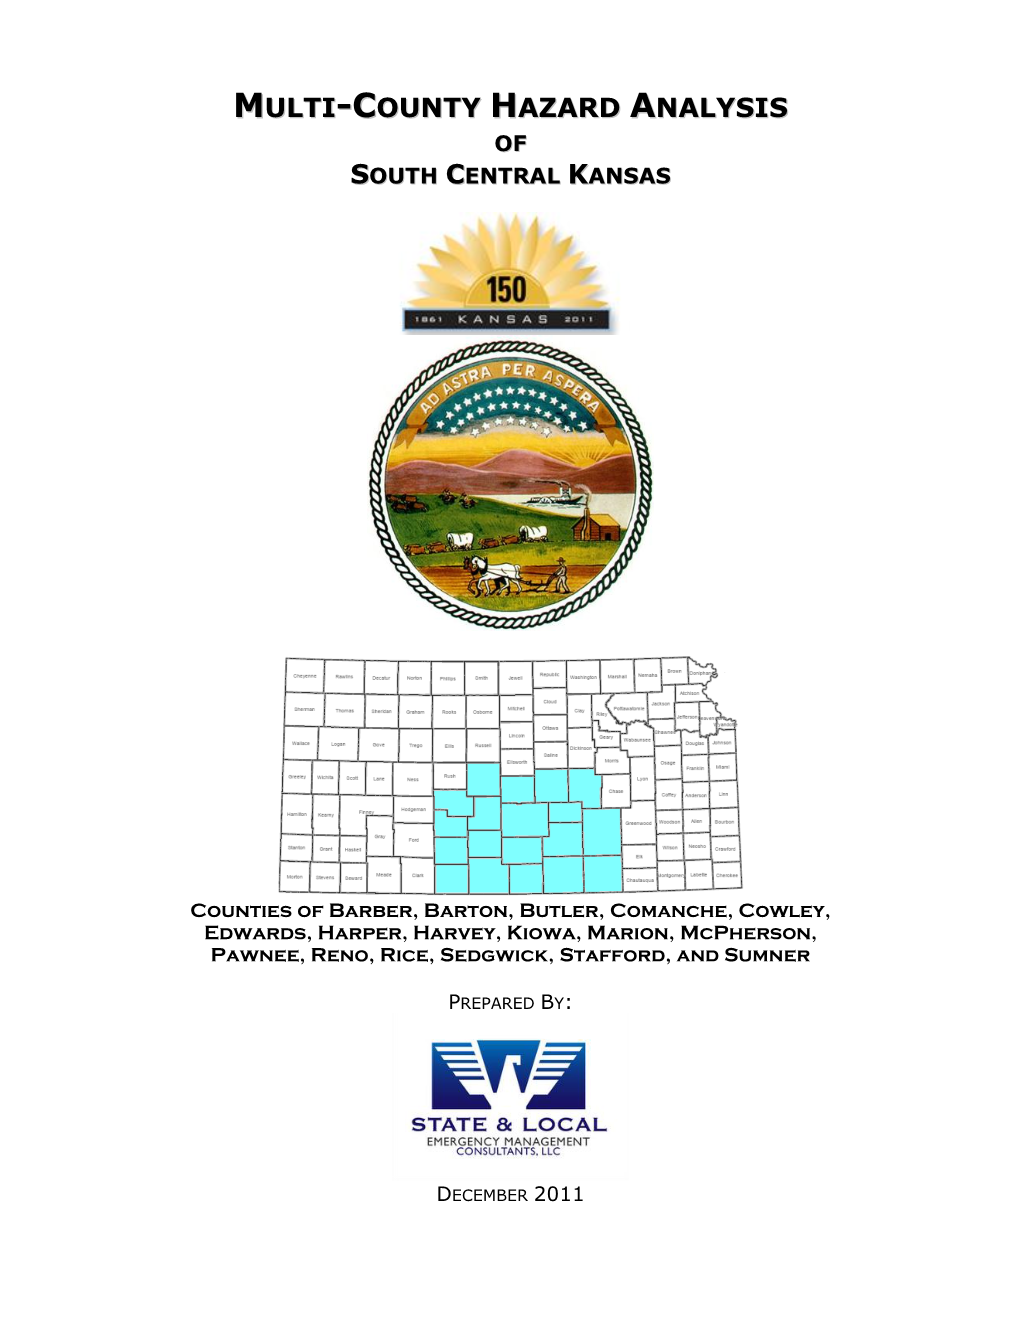 Multi-County Hazard Analysis of South Central Kansas